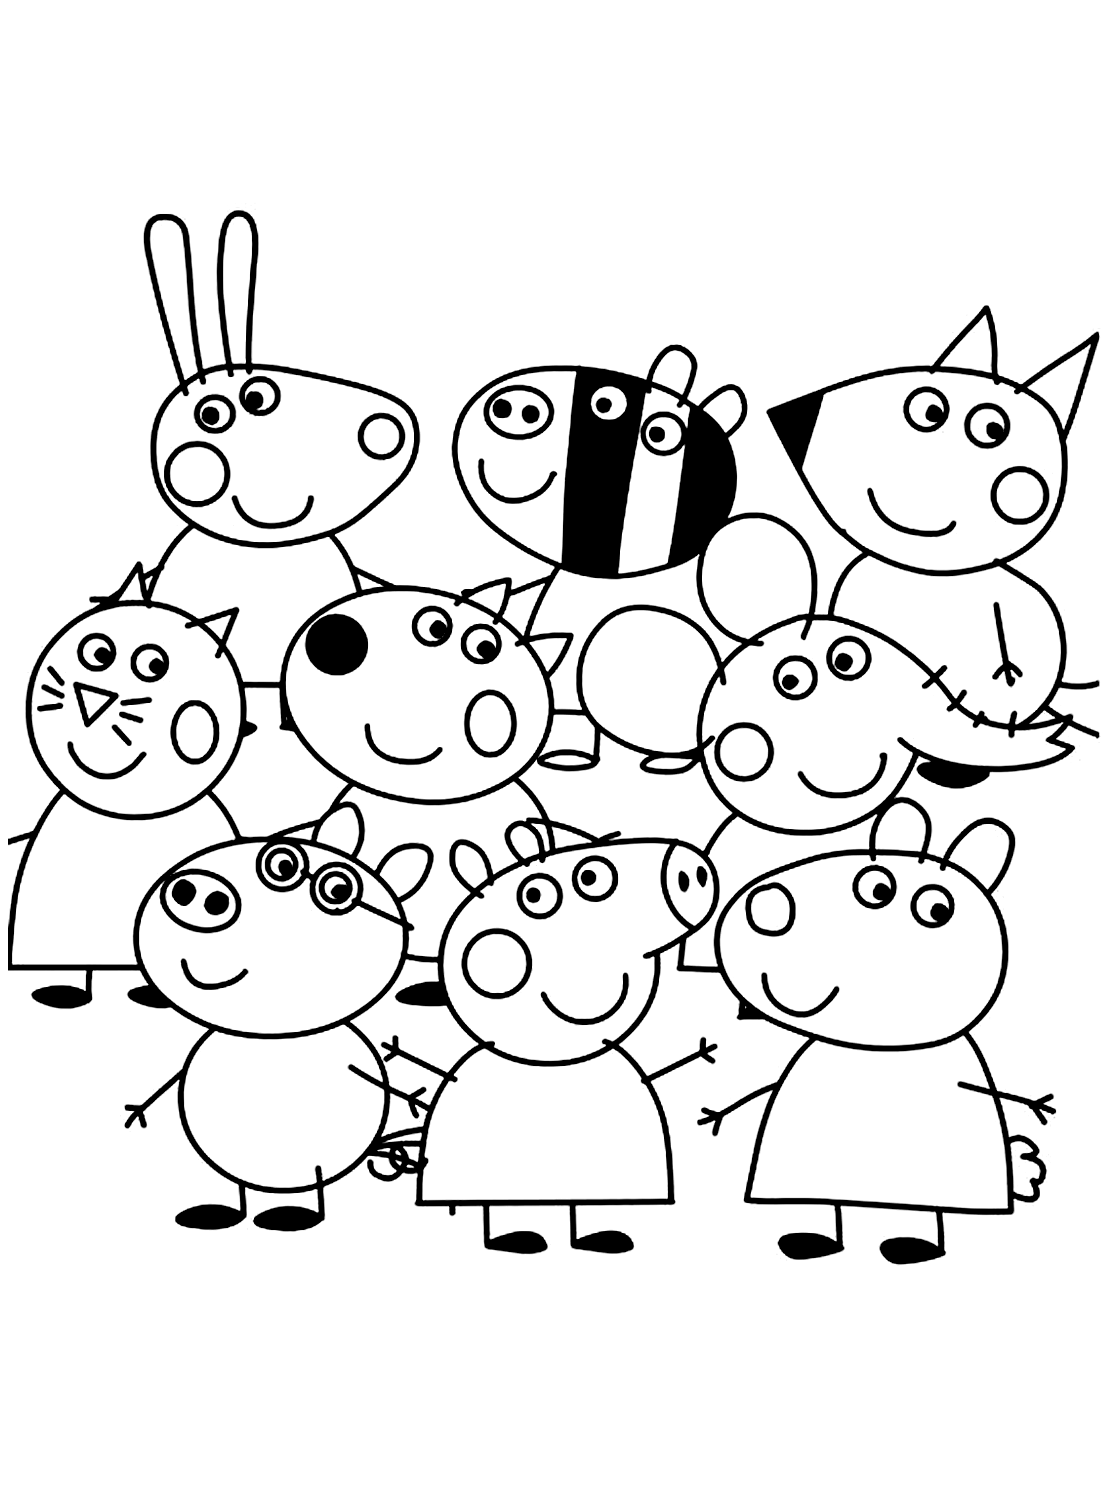 Pagina dei cartoni animati di Peppa Pig